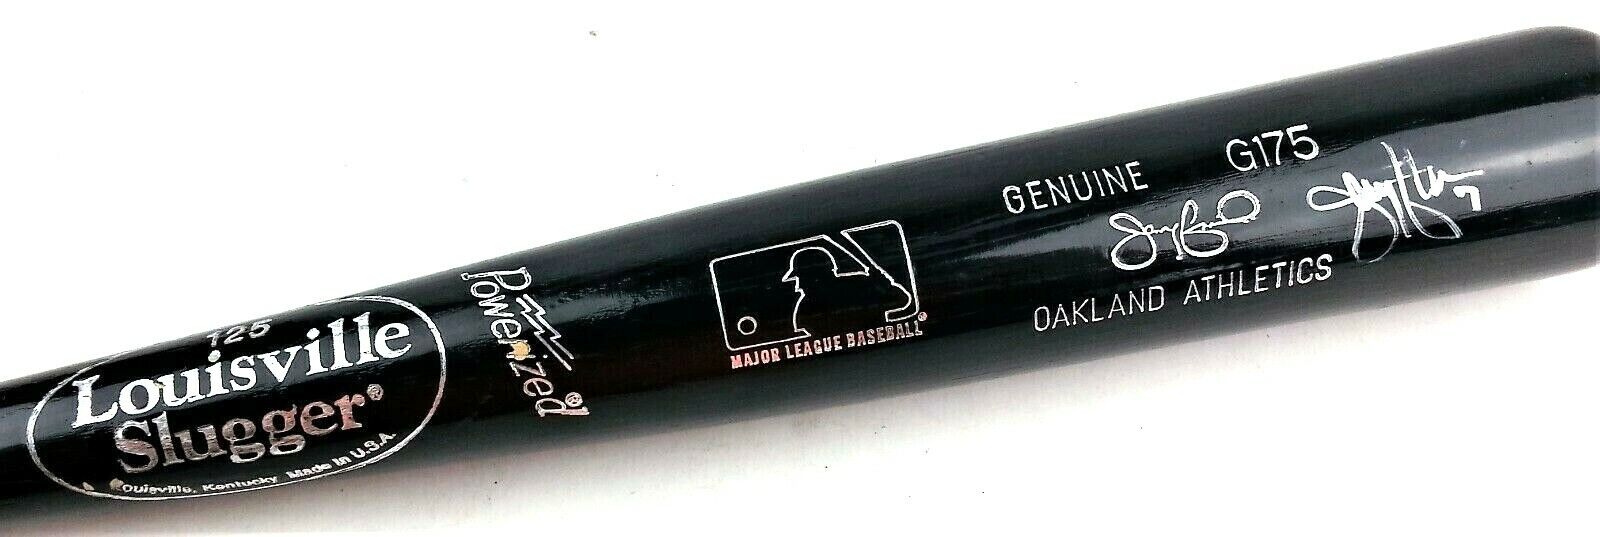 Oakland A's Louisville Slugger Autographed Bat Jeremy Giambi 2x Signed MLB G175